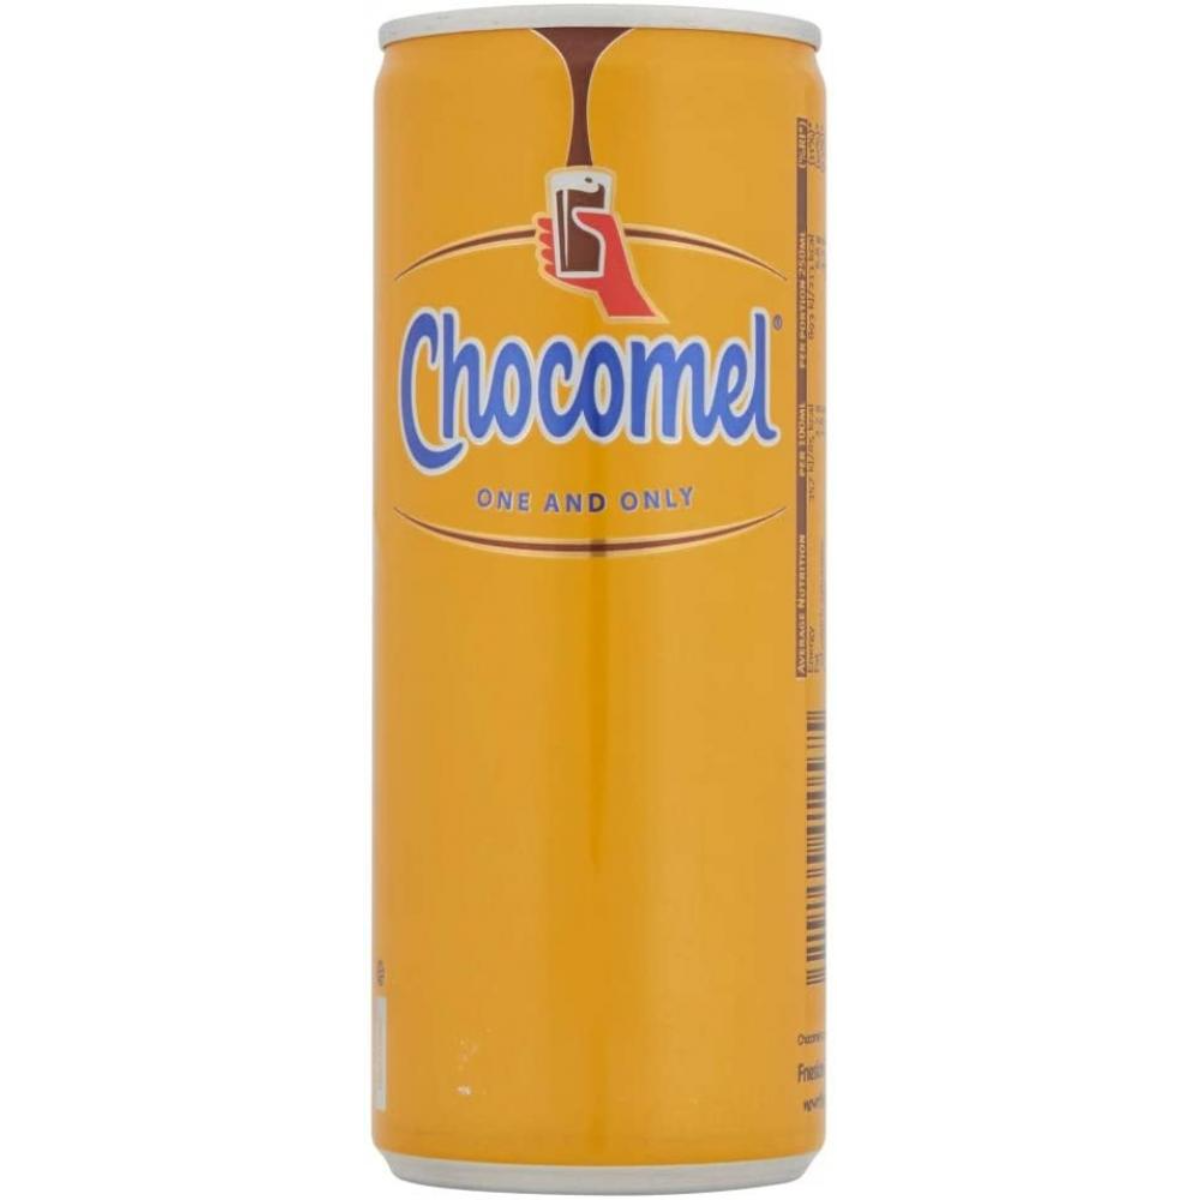 Chocomel Original Dutch Chocolate Milk Drink